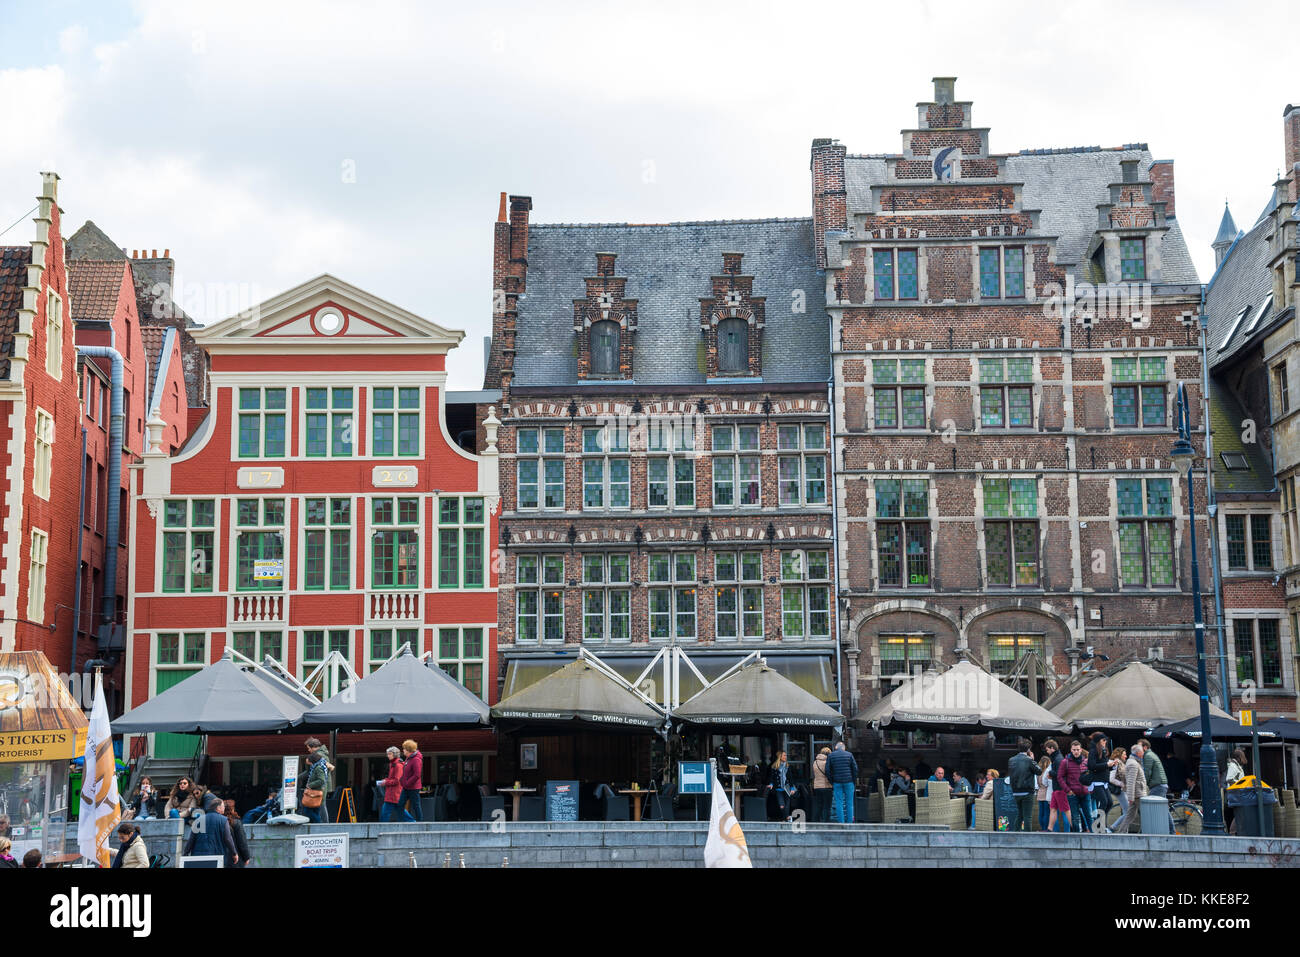 Ghent, Belgium - April 16, 2017: Row of historic colorful buildings in Ghent, Belgium Stock Photo